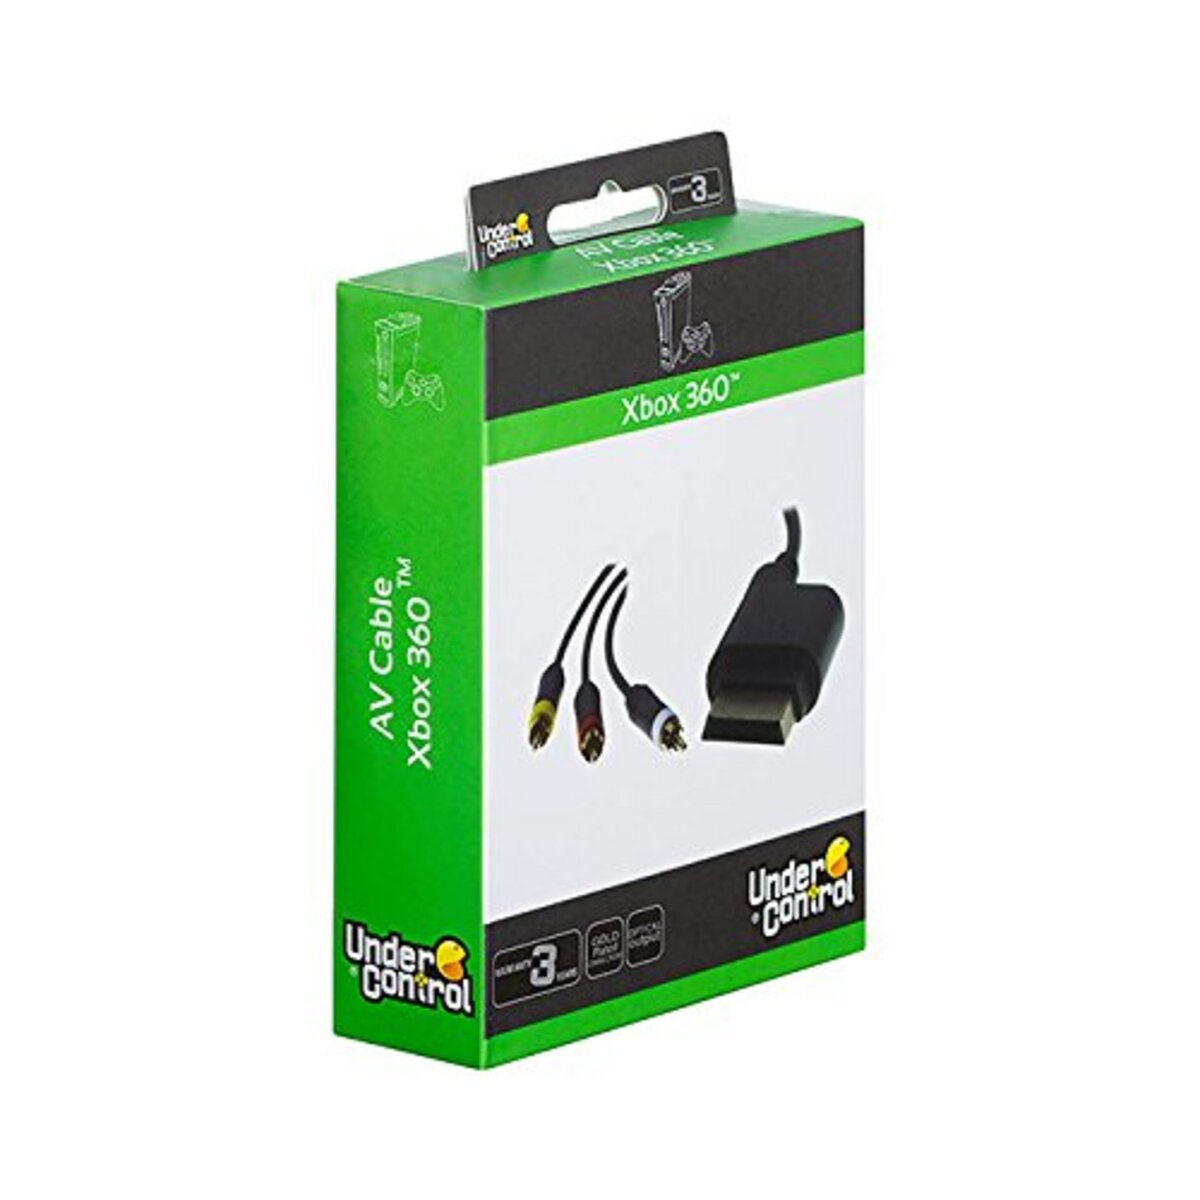 Cable AV pour Xbox 360